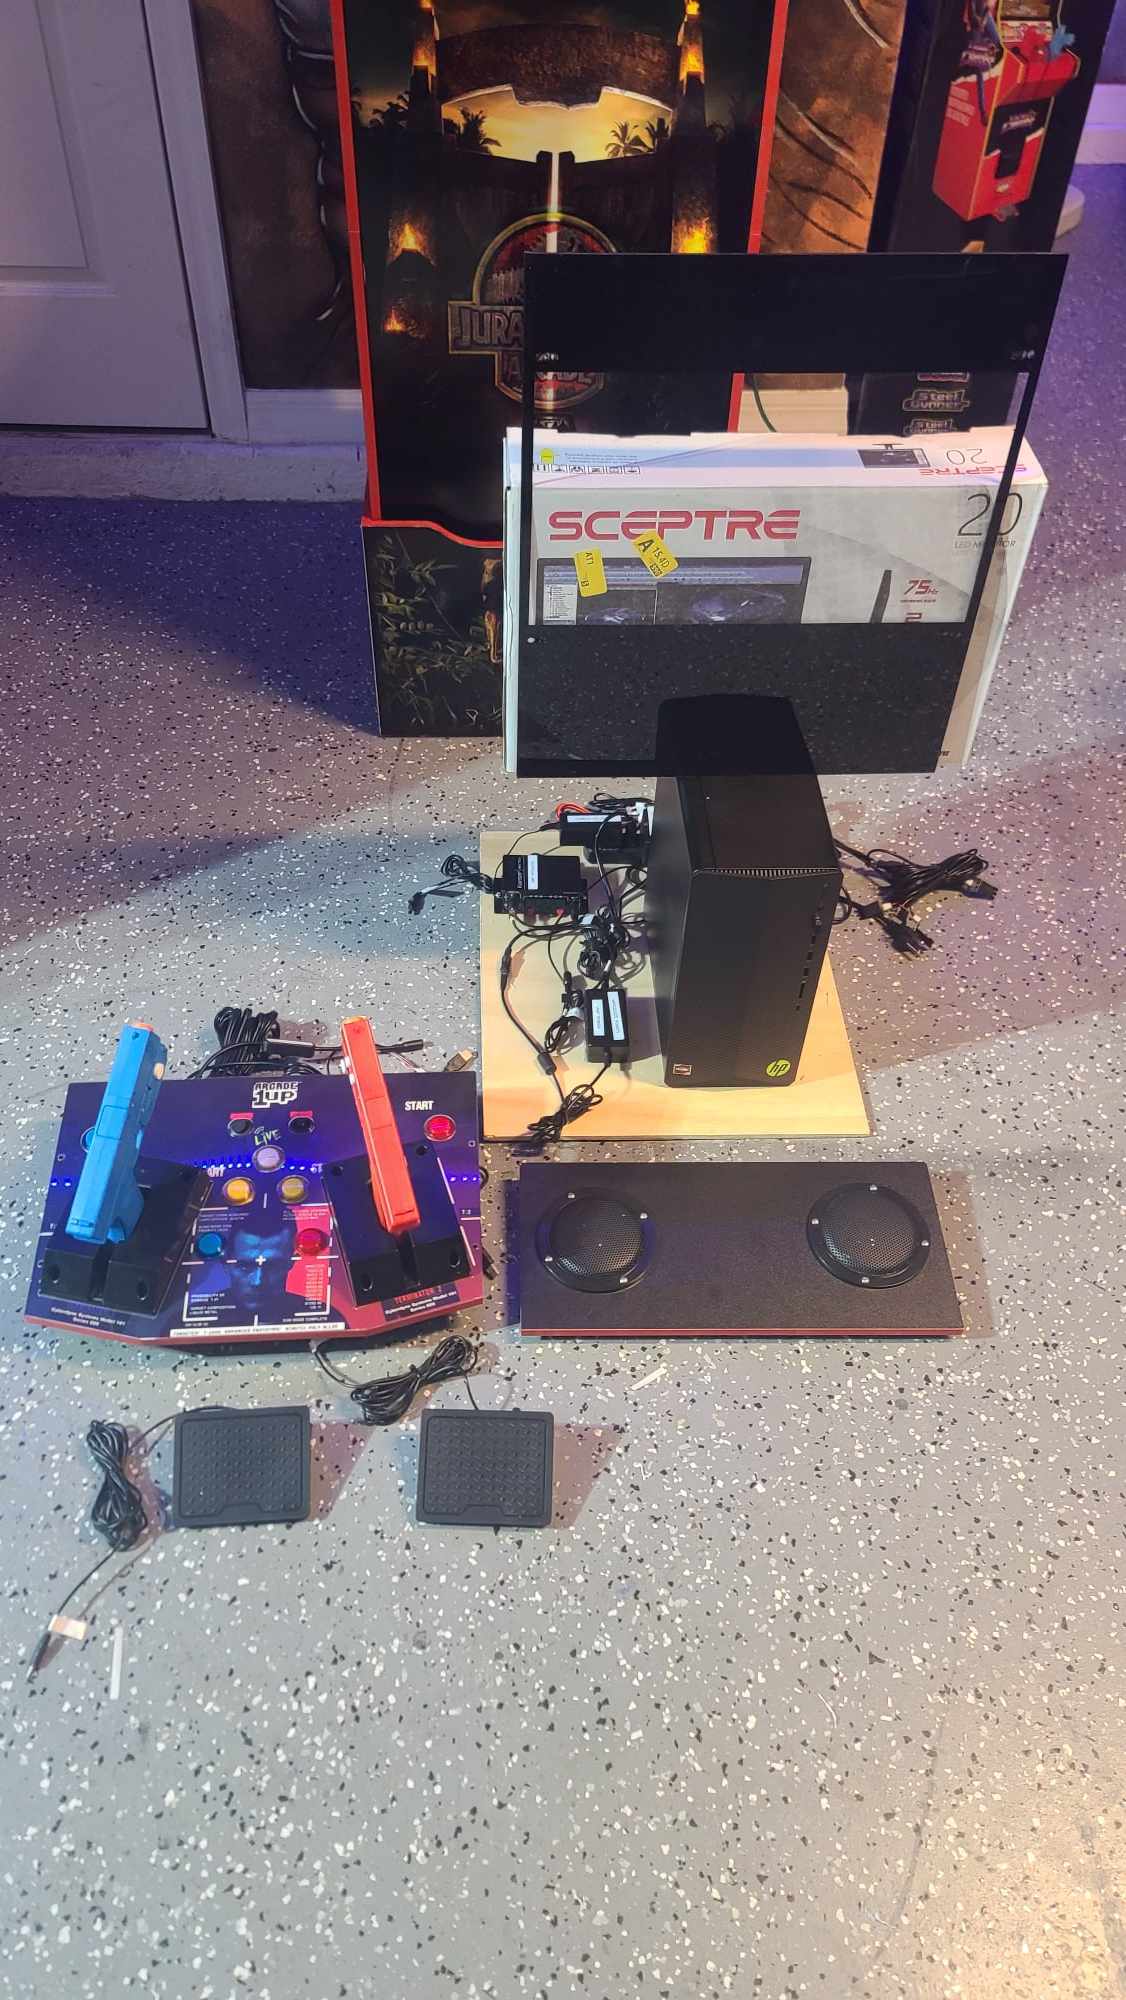 Terminator 2 Arcade 1up Retroshooter Light Gun Premium Mod Kit with pedals (435 light gun games)